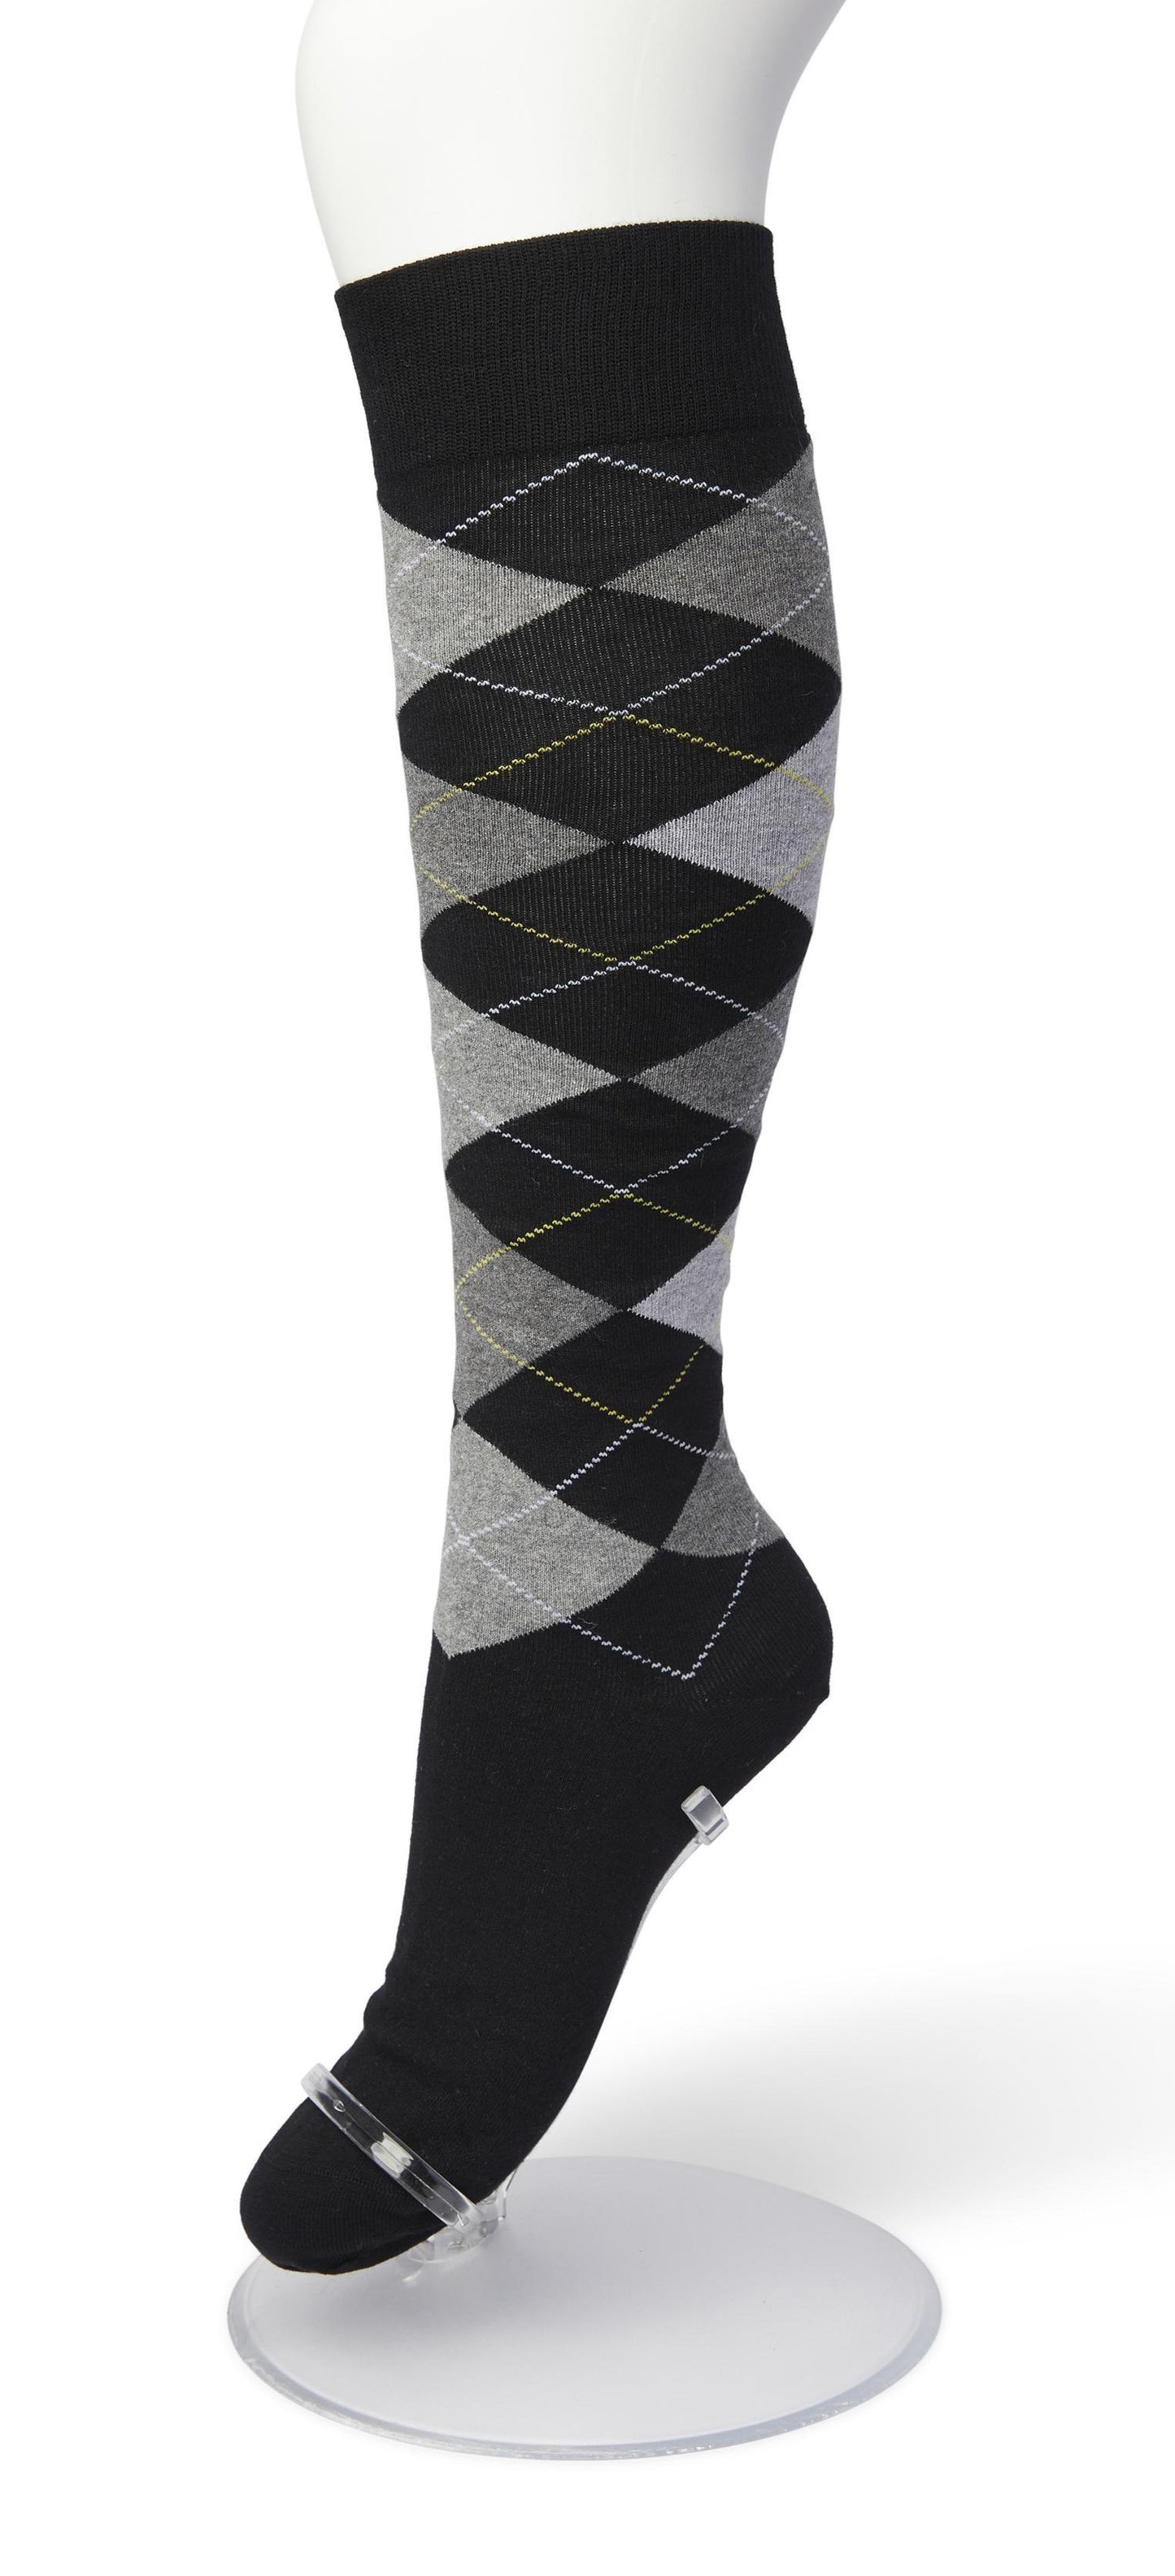 Bonnie Doon BP211505 Argyle Knee-highs - Golf style knee-high socks with a diamond argyle tartan check pattern in black, grey and yellow.